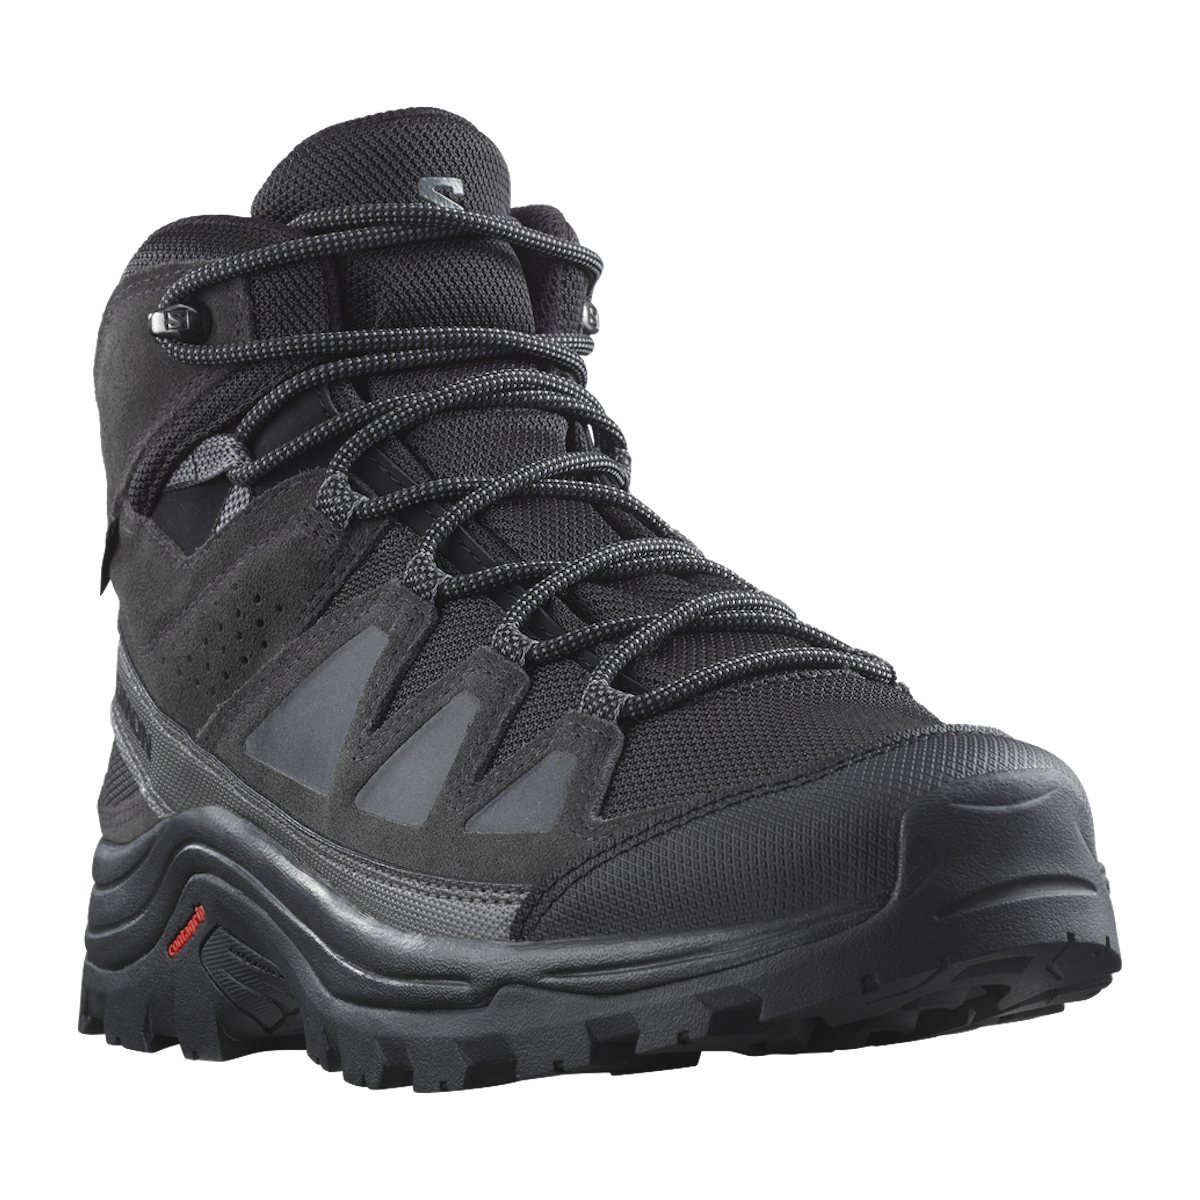 SALOMON QUEST ROVE GTX hiking footwear - black/dark grey